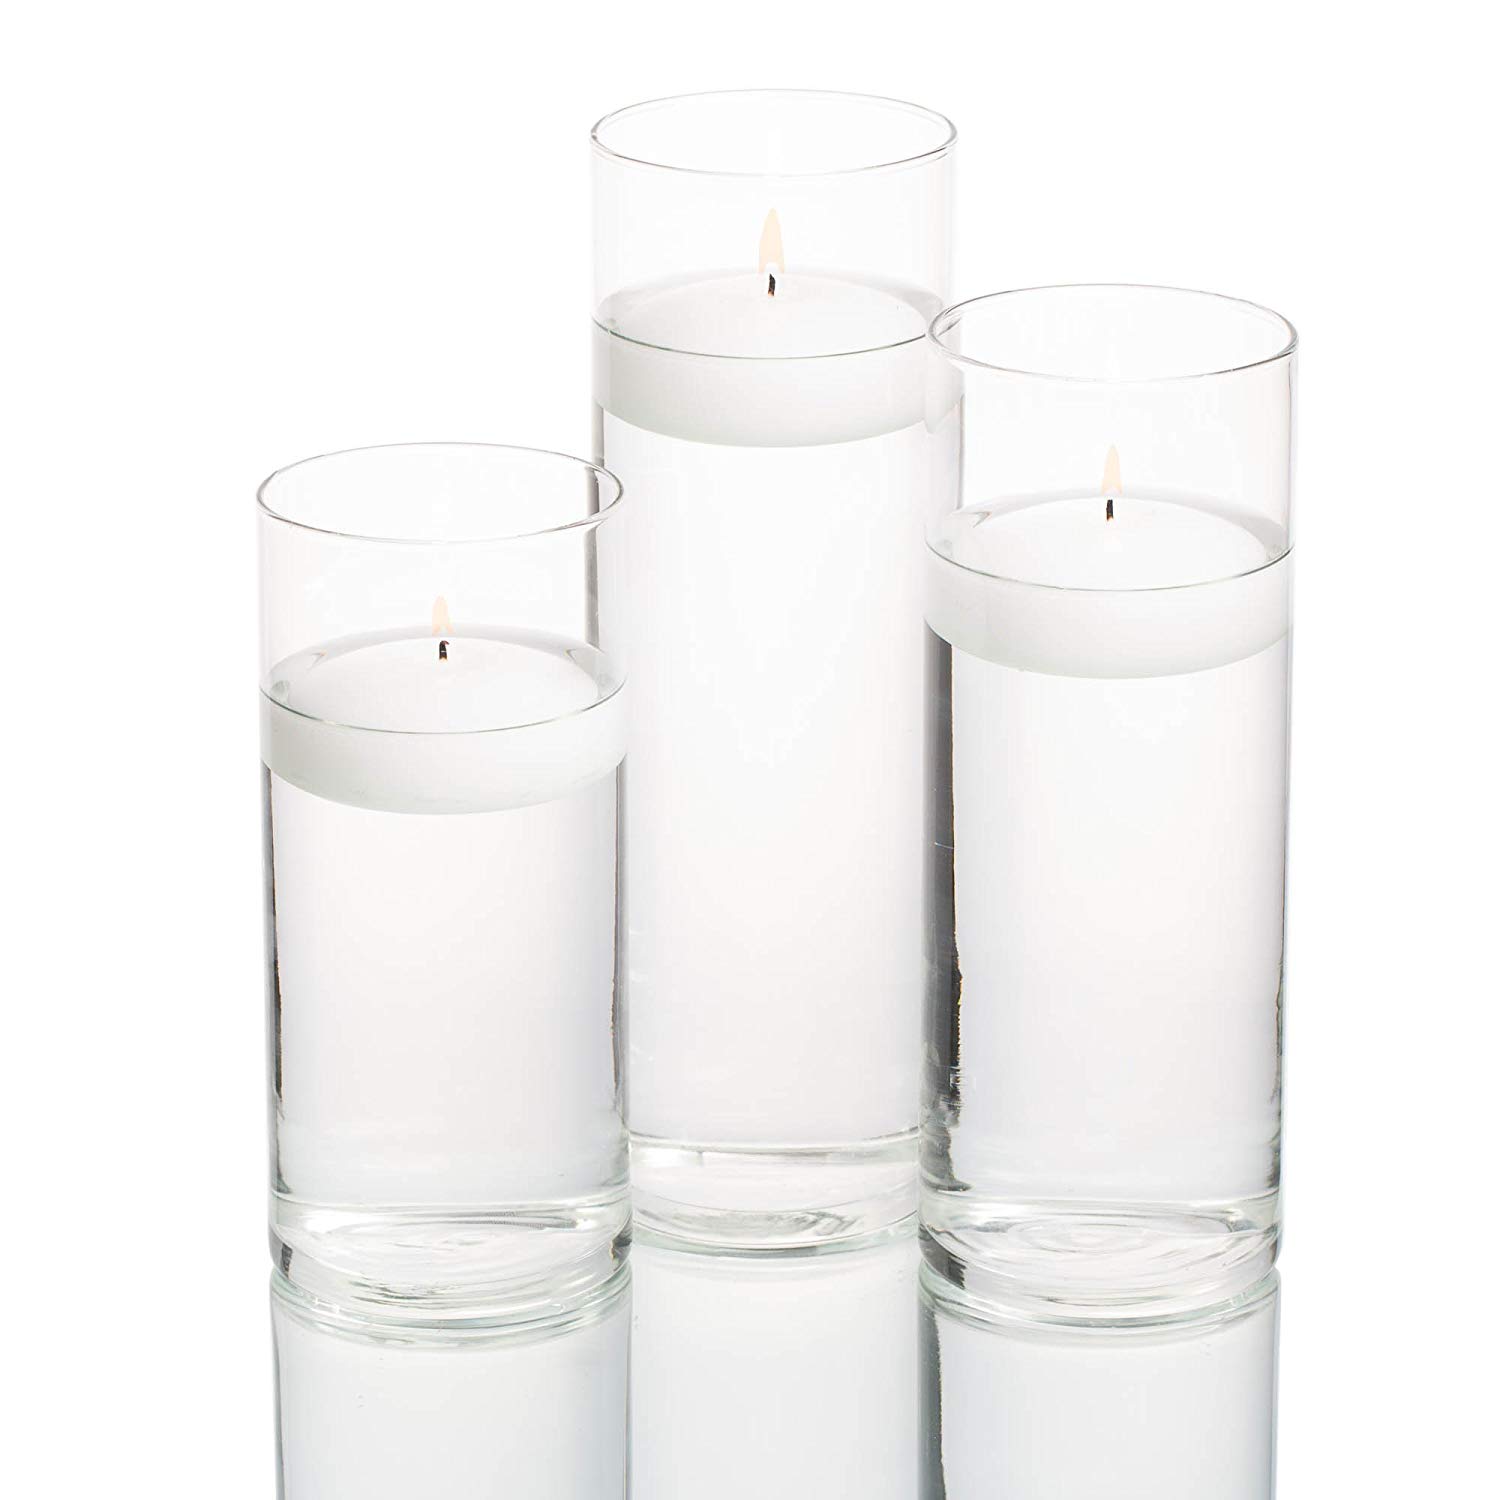 Candles | Amazon.com